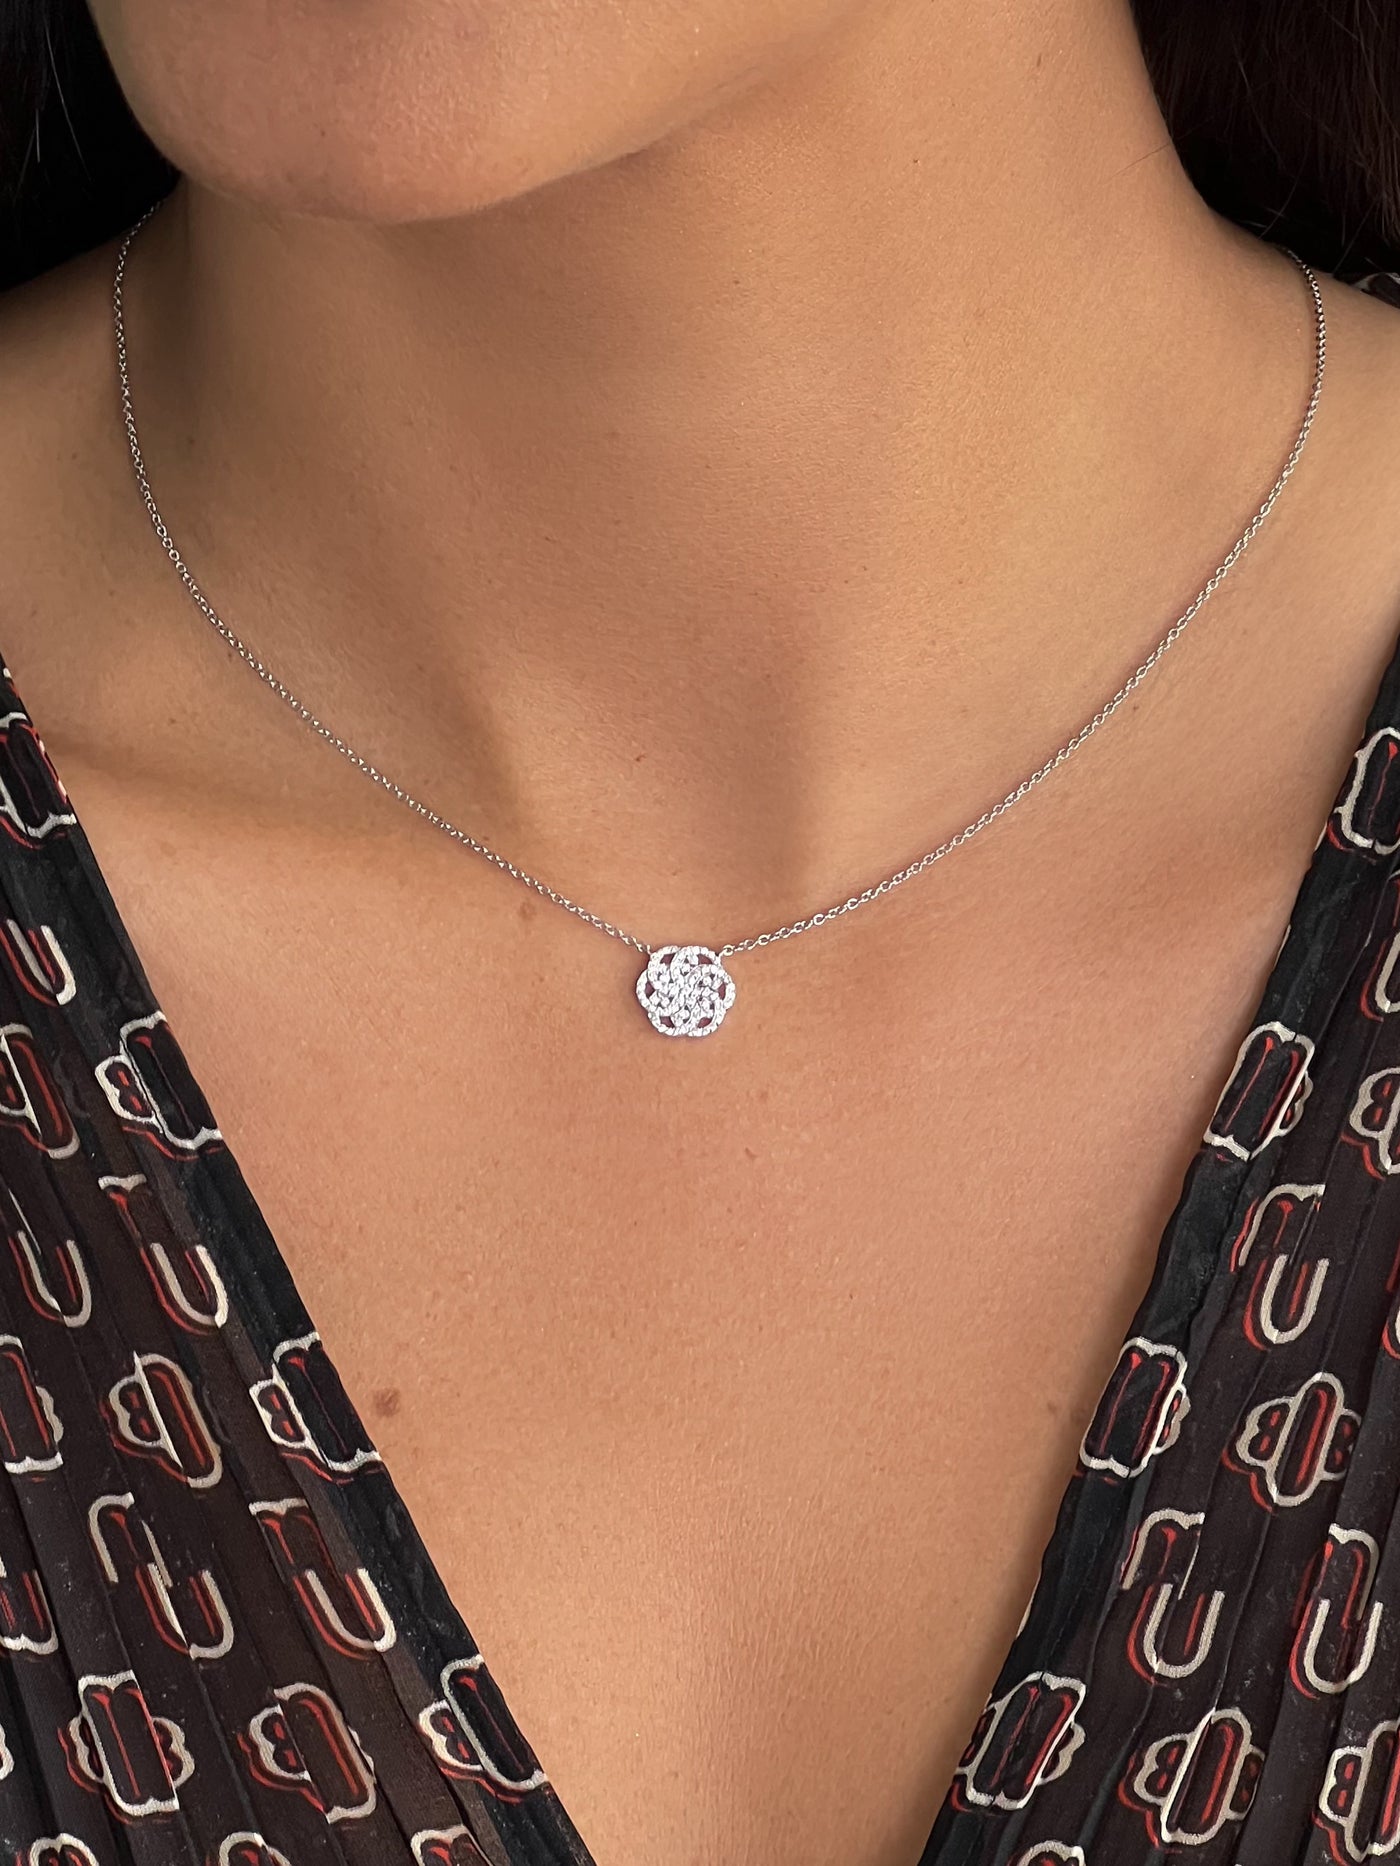 Pave Set Diamond Flower of Life Pendant in 18k White Gold